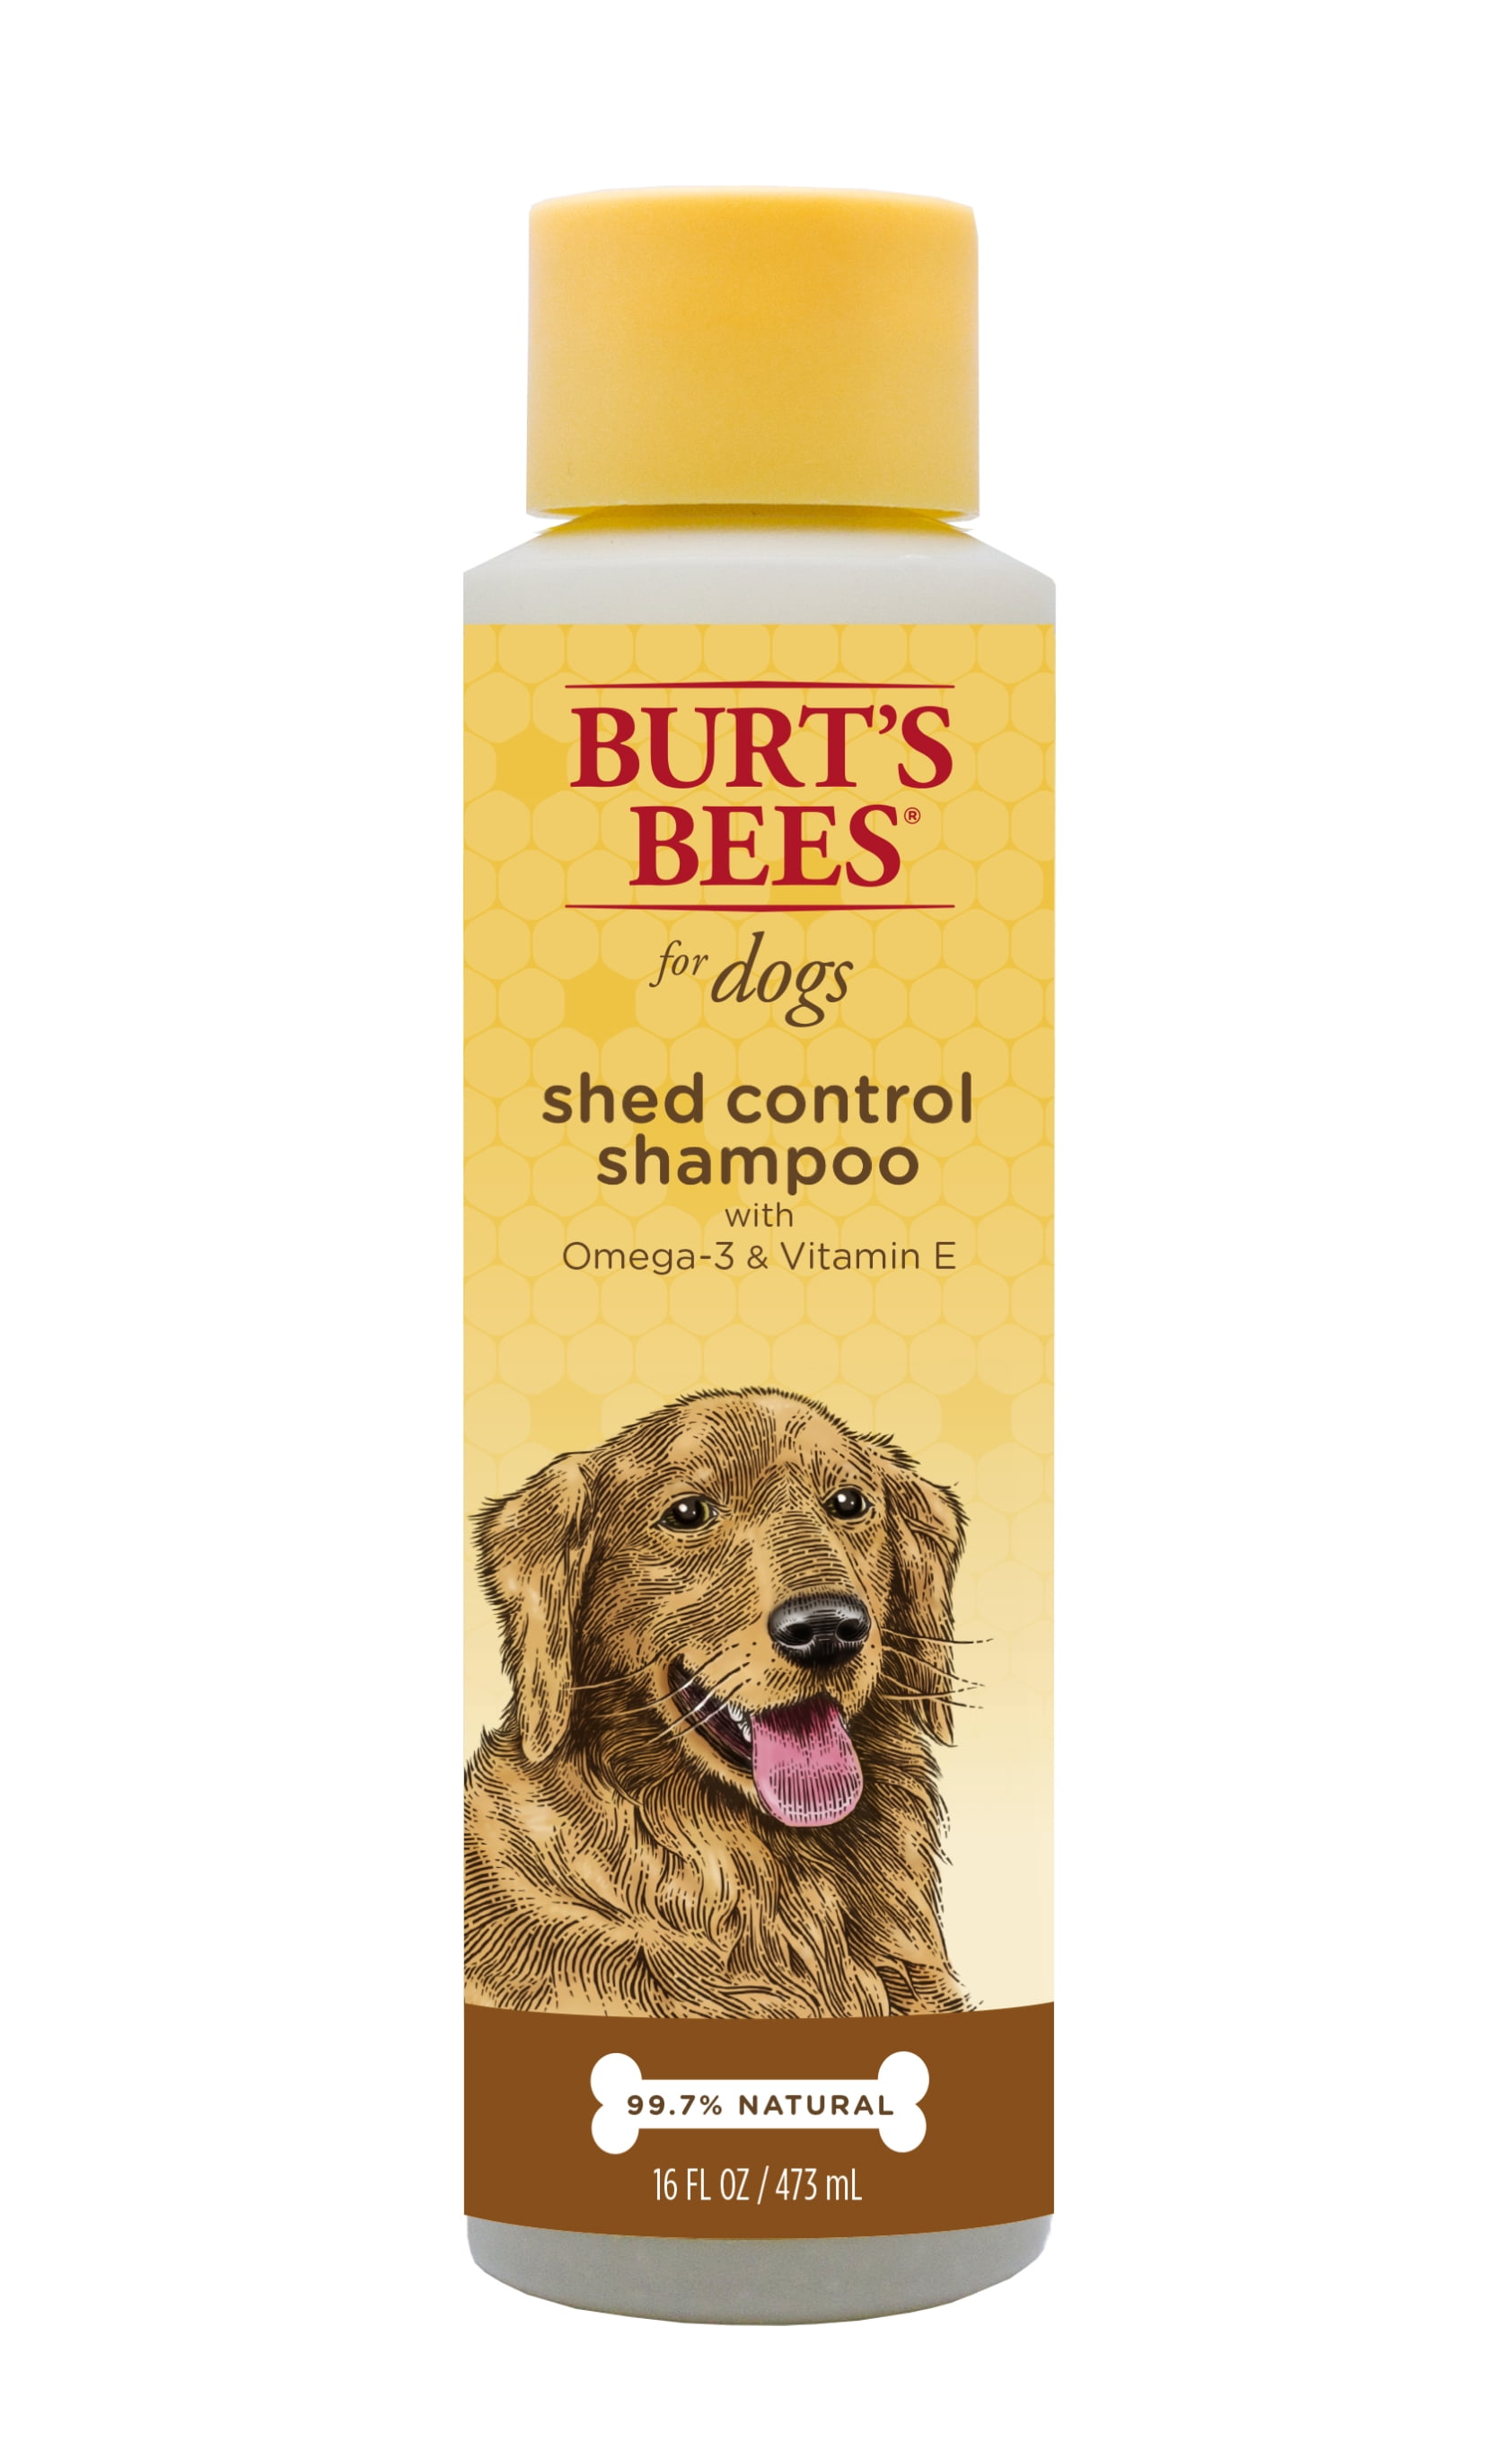 Burt's Bees Shed Control Dog Shampoo 